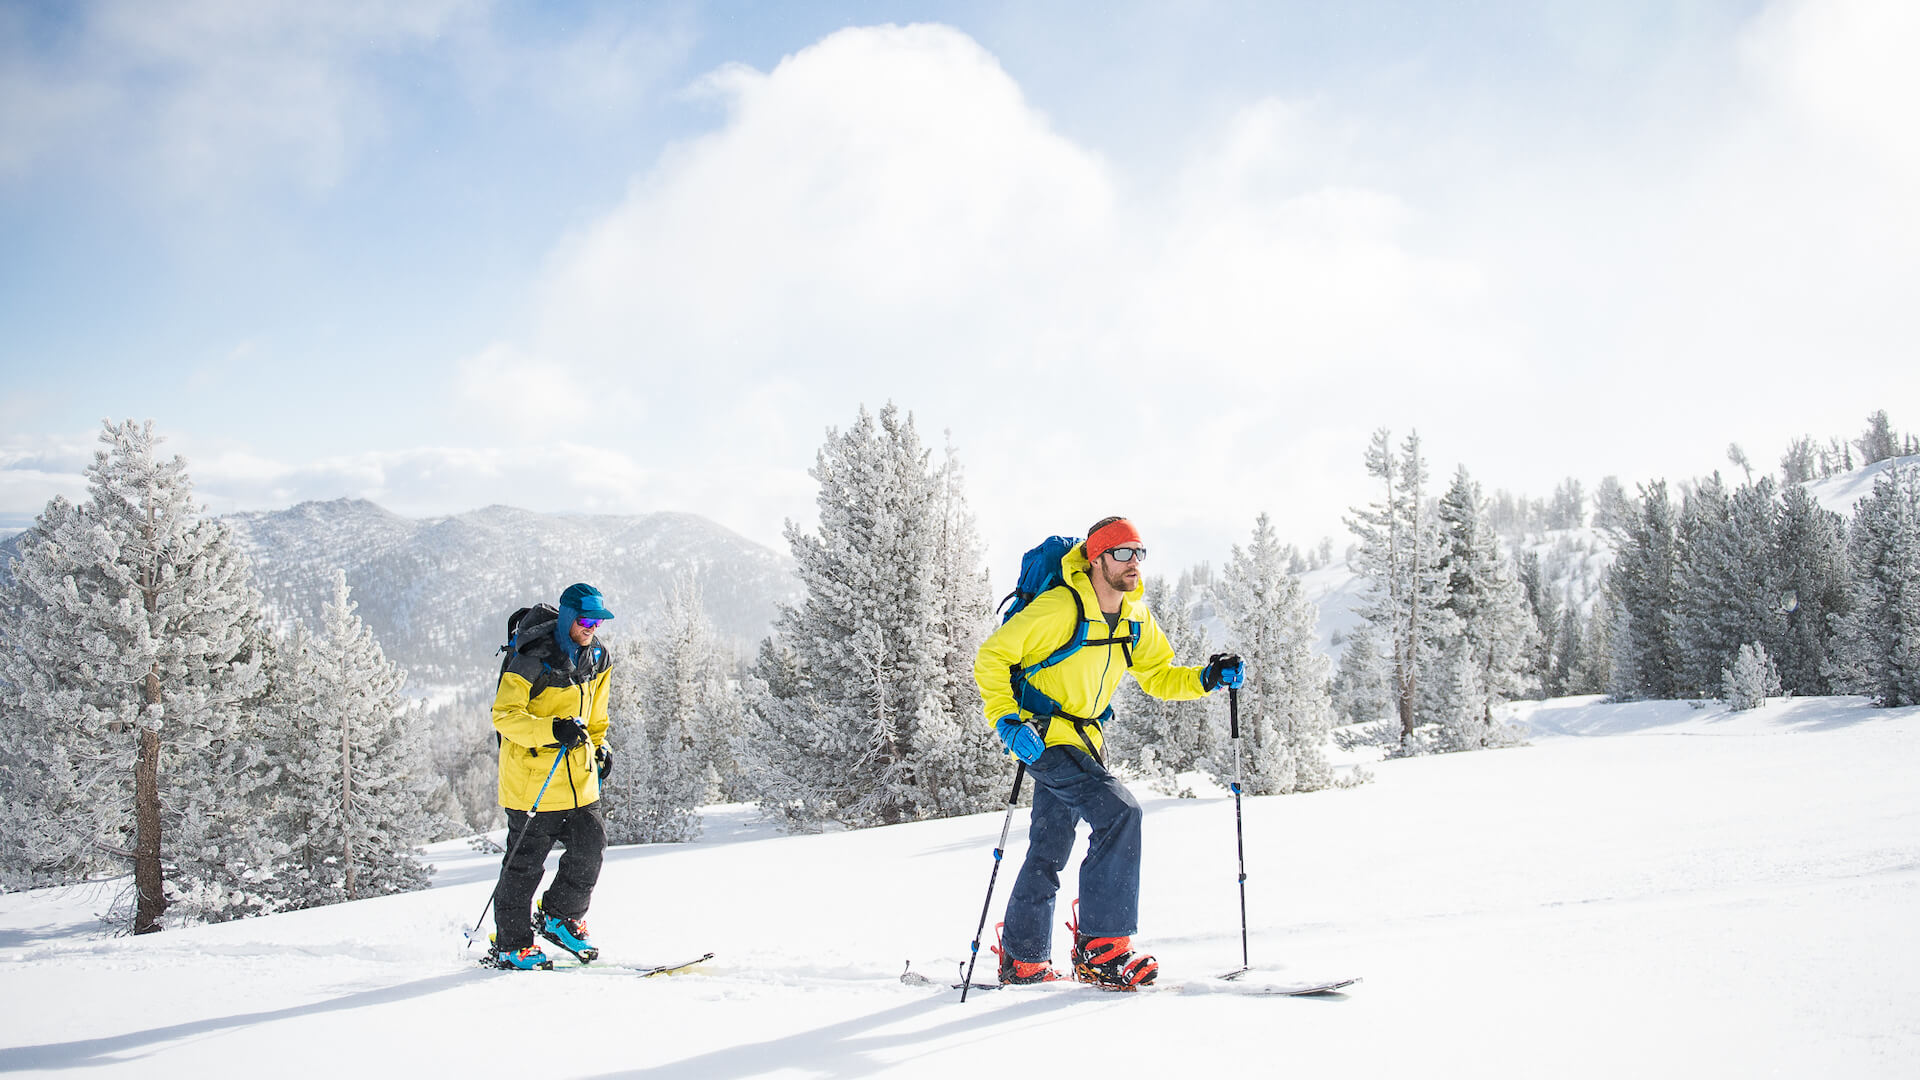 Skiing in Lake Tahoe backcountry - Kyle Smaine / Lake Tahoe Visitors Authority